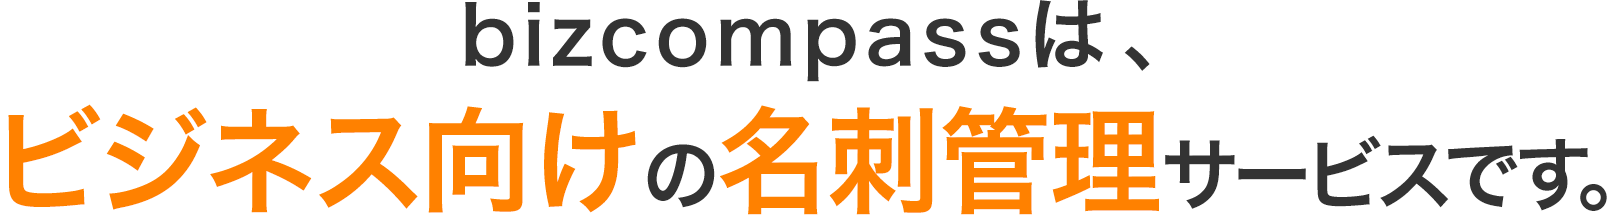 bizcompassは、ビジネス向けの名刺管理サービスです。